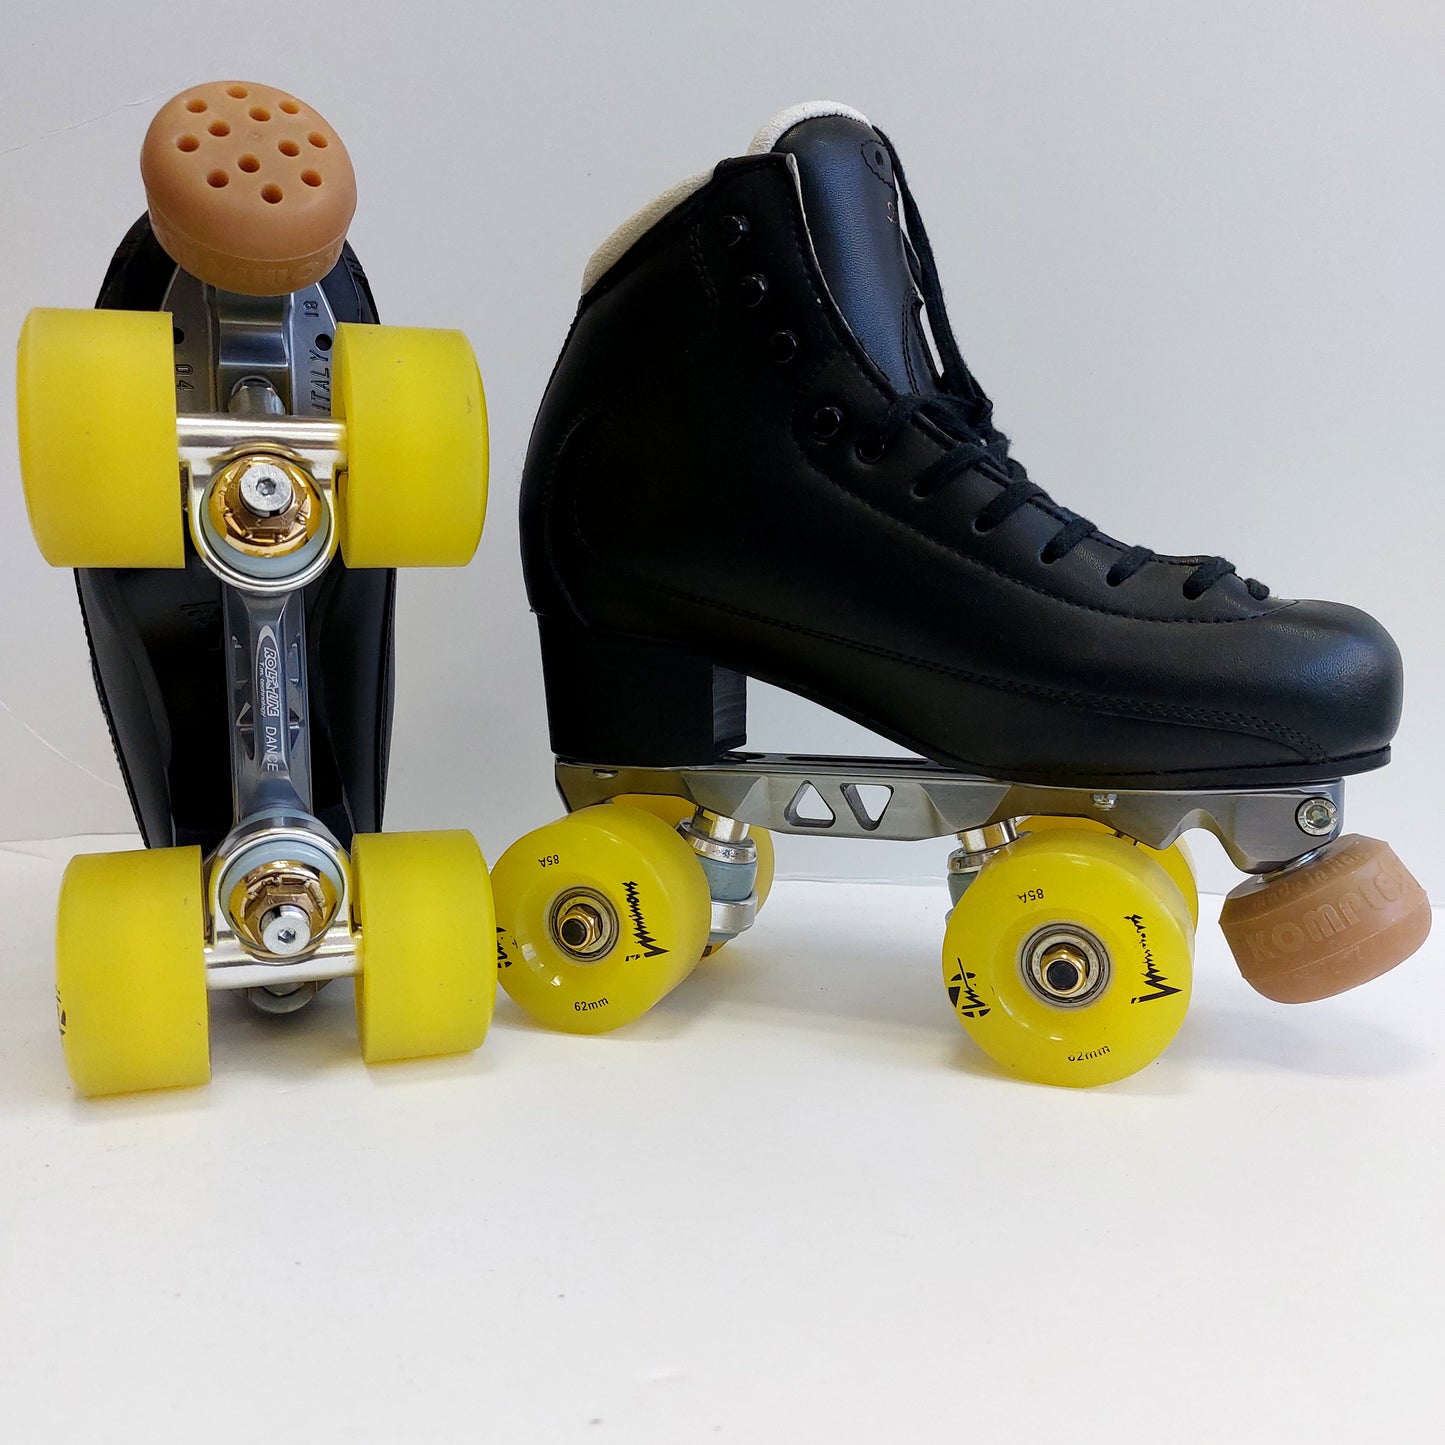 Skate Boot Risport Prime